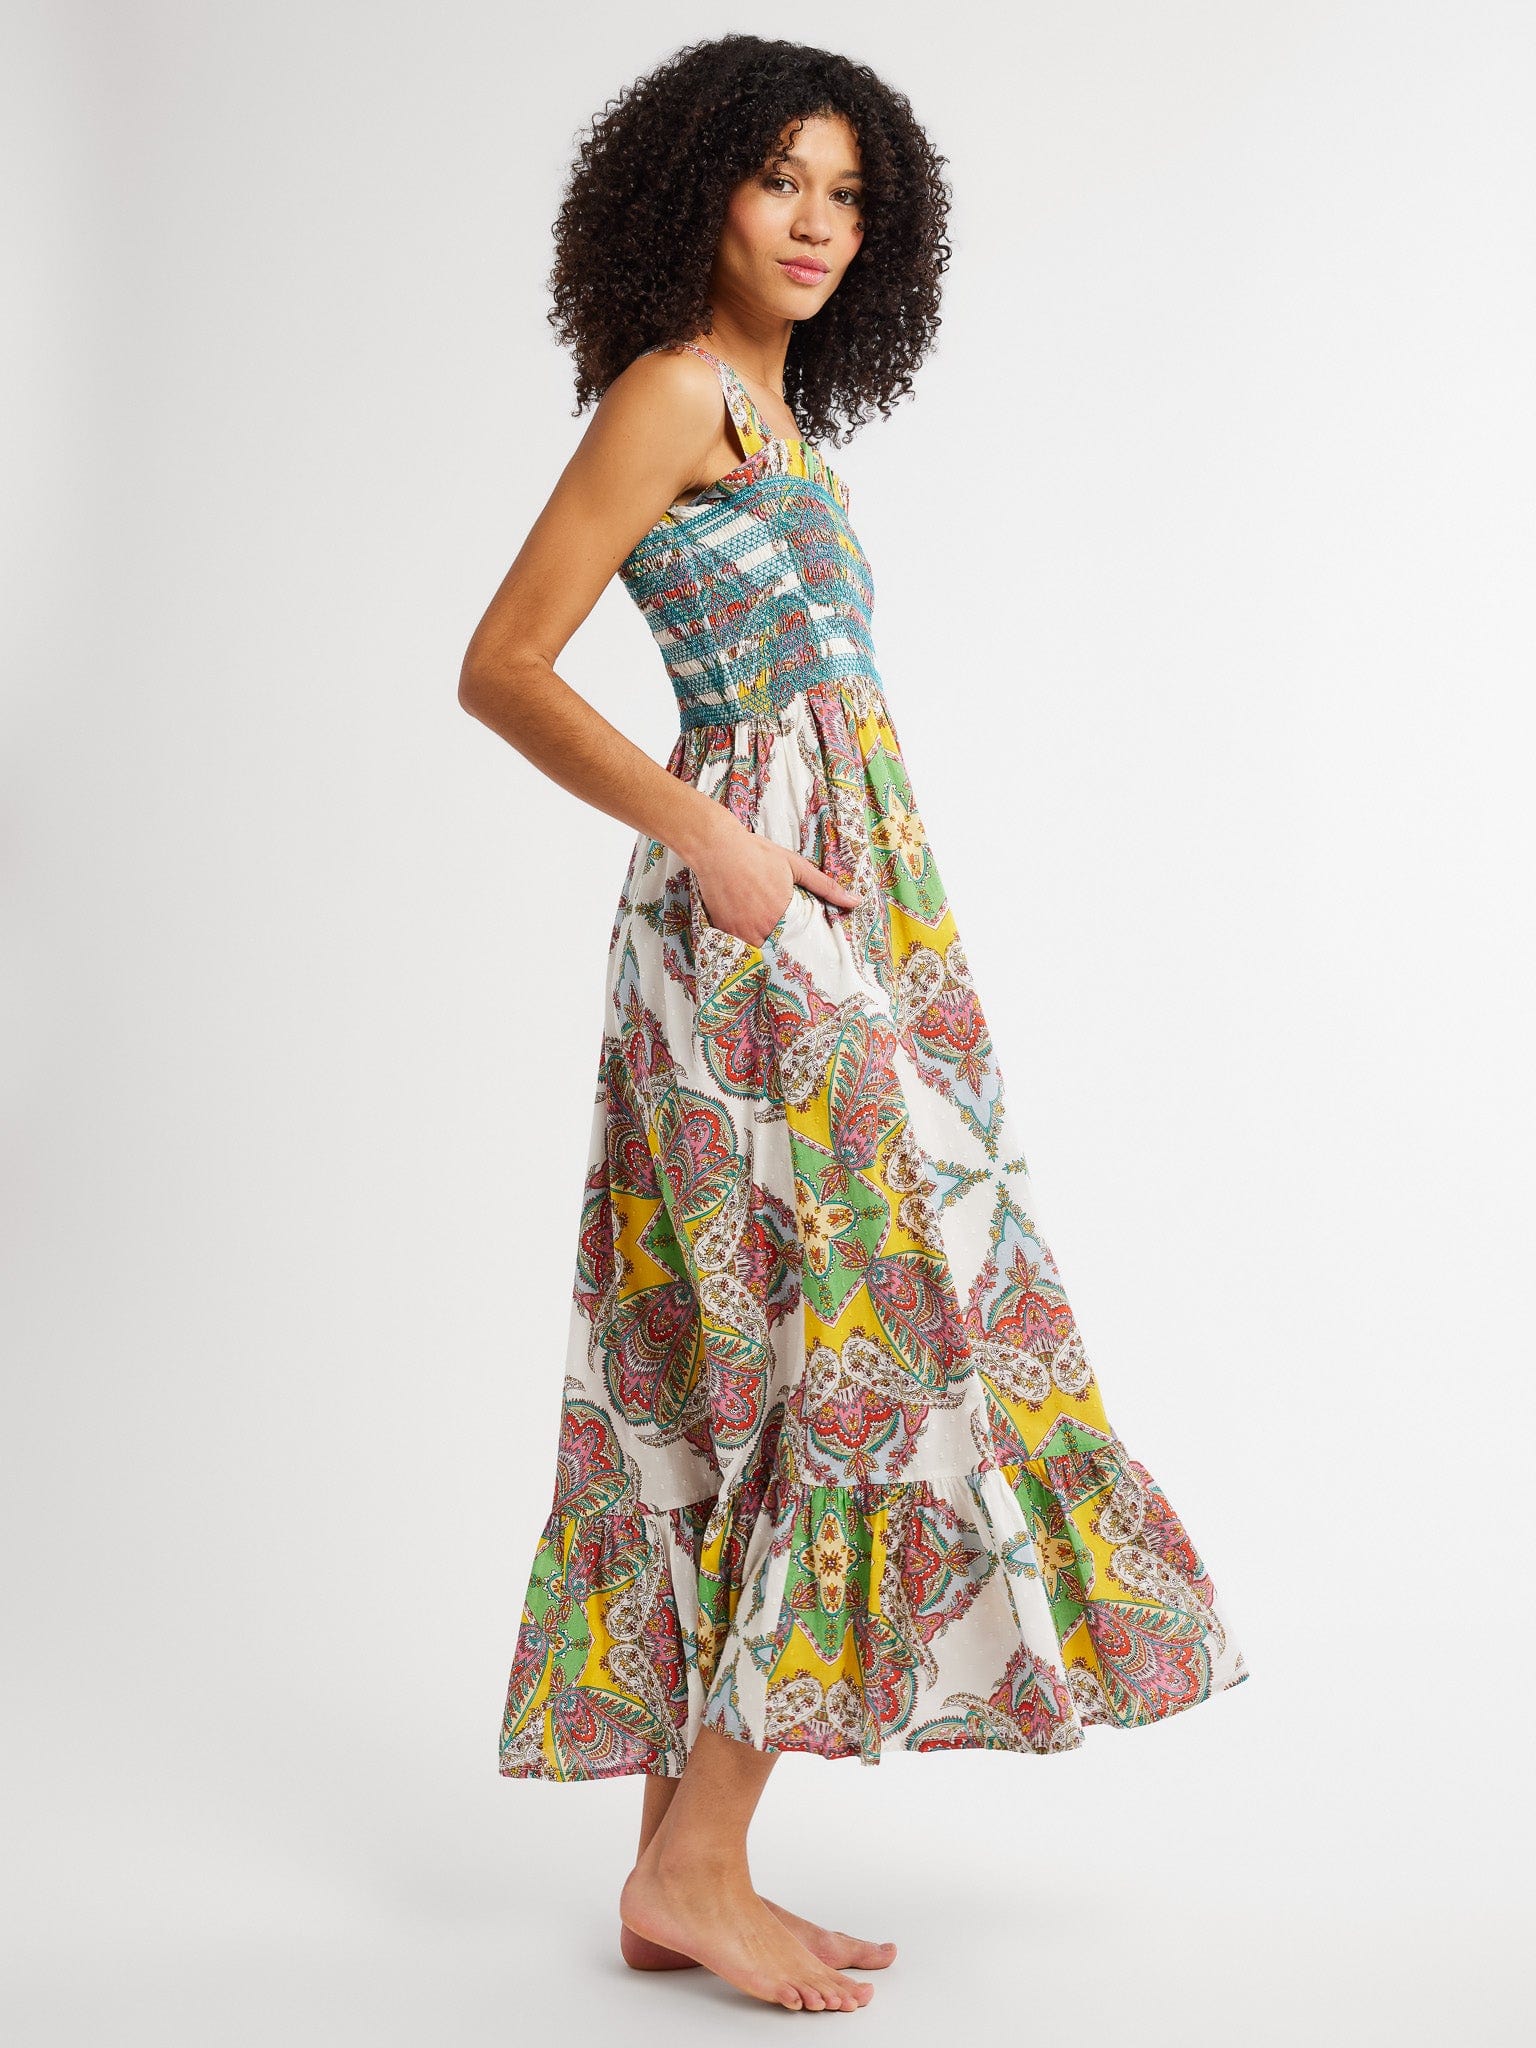 MILLE Clothing Garden Dress in Kaleidoscope